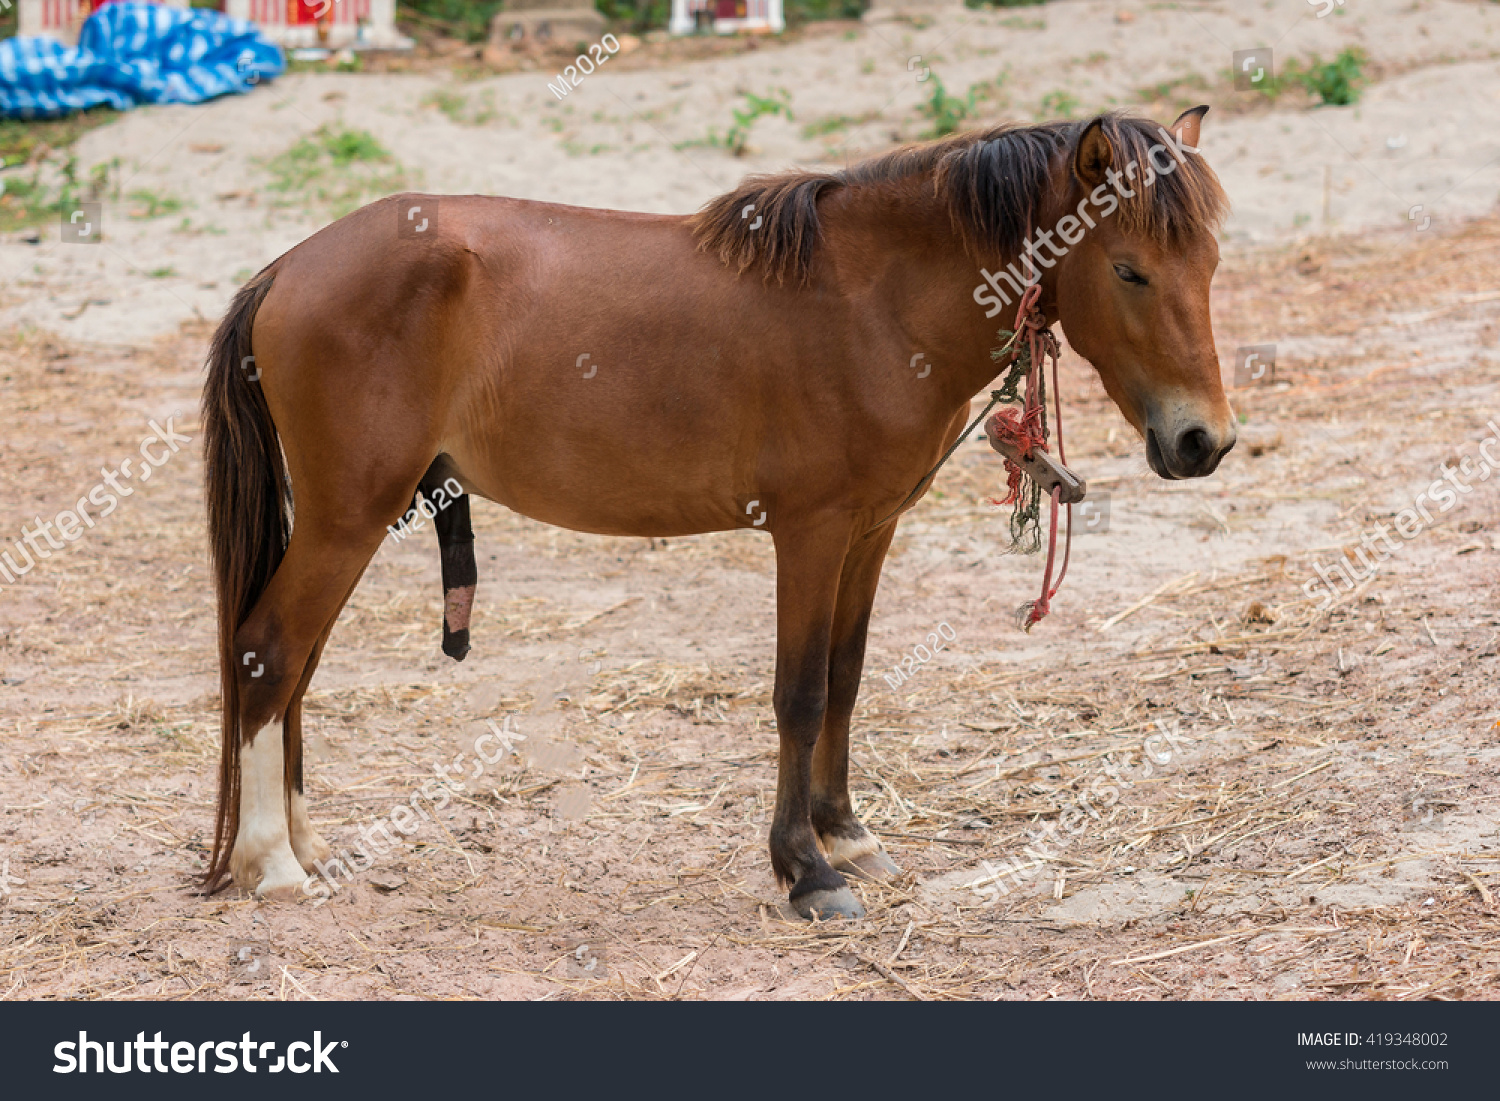 stock-photo-penis-of-horse-419348002.jpg